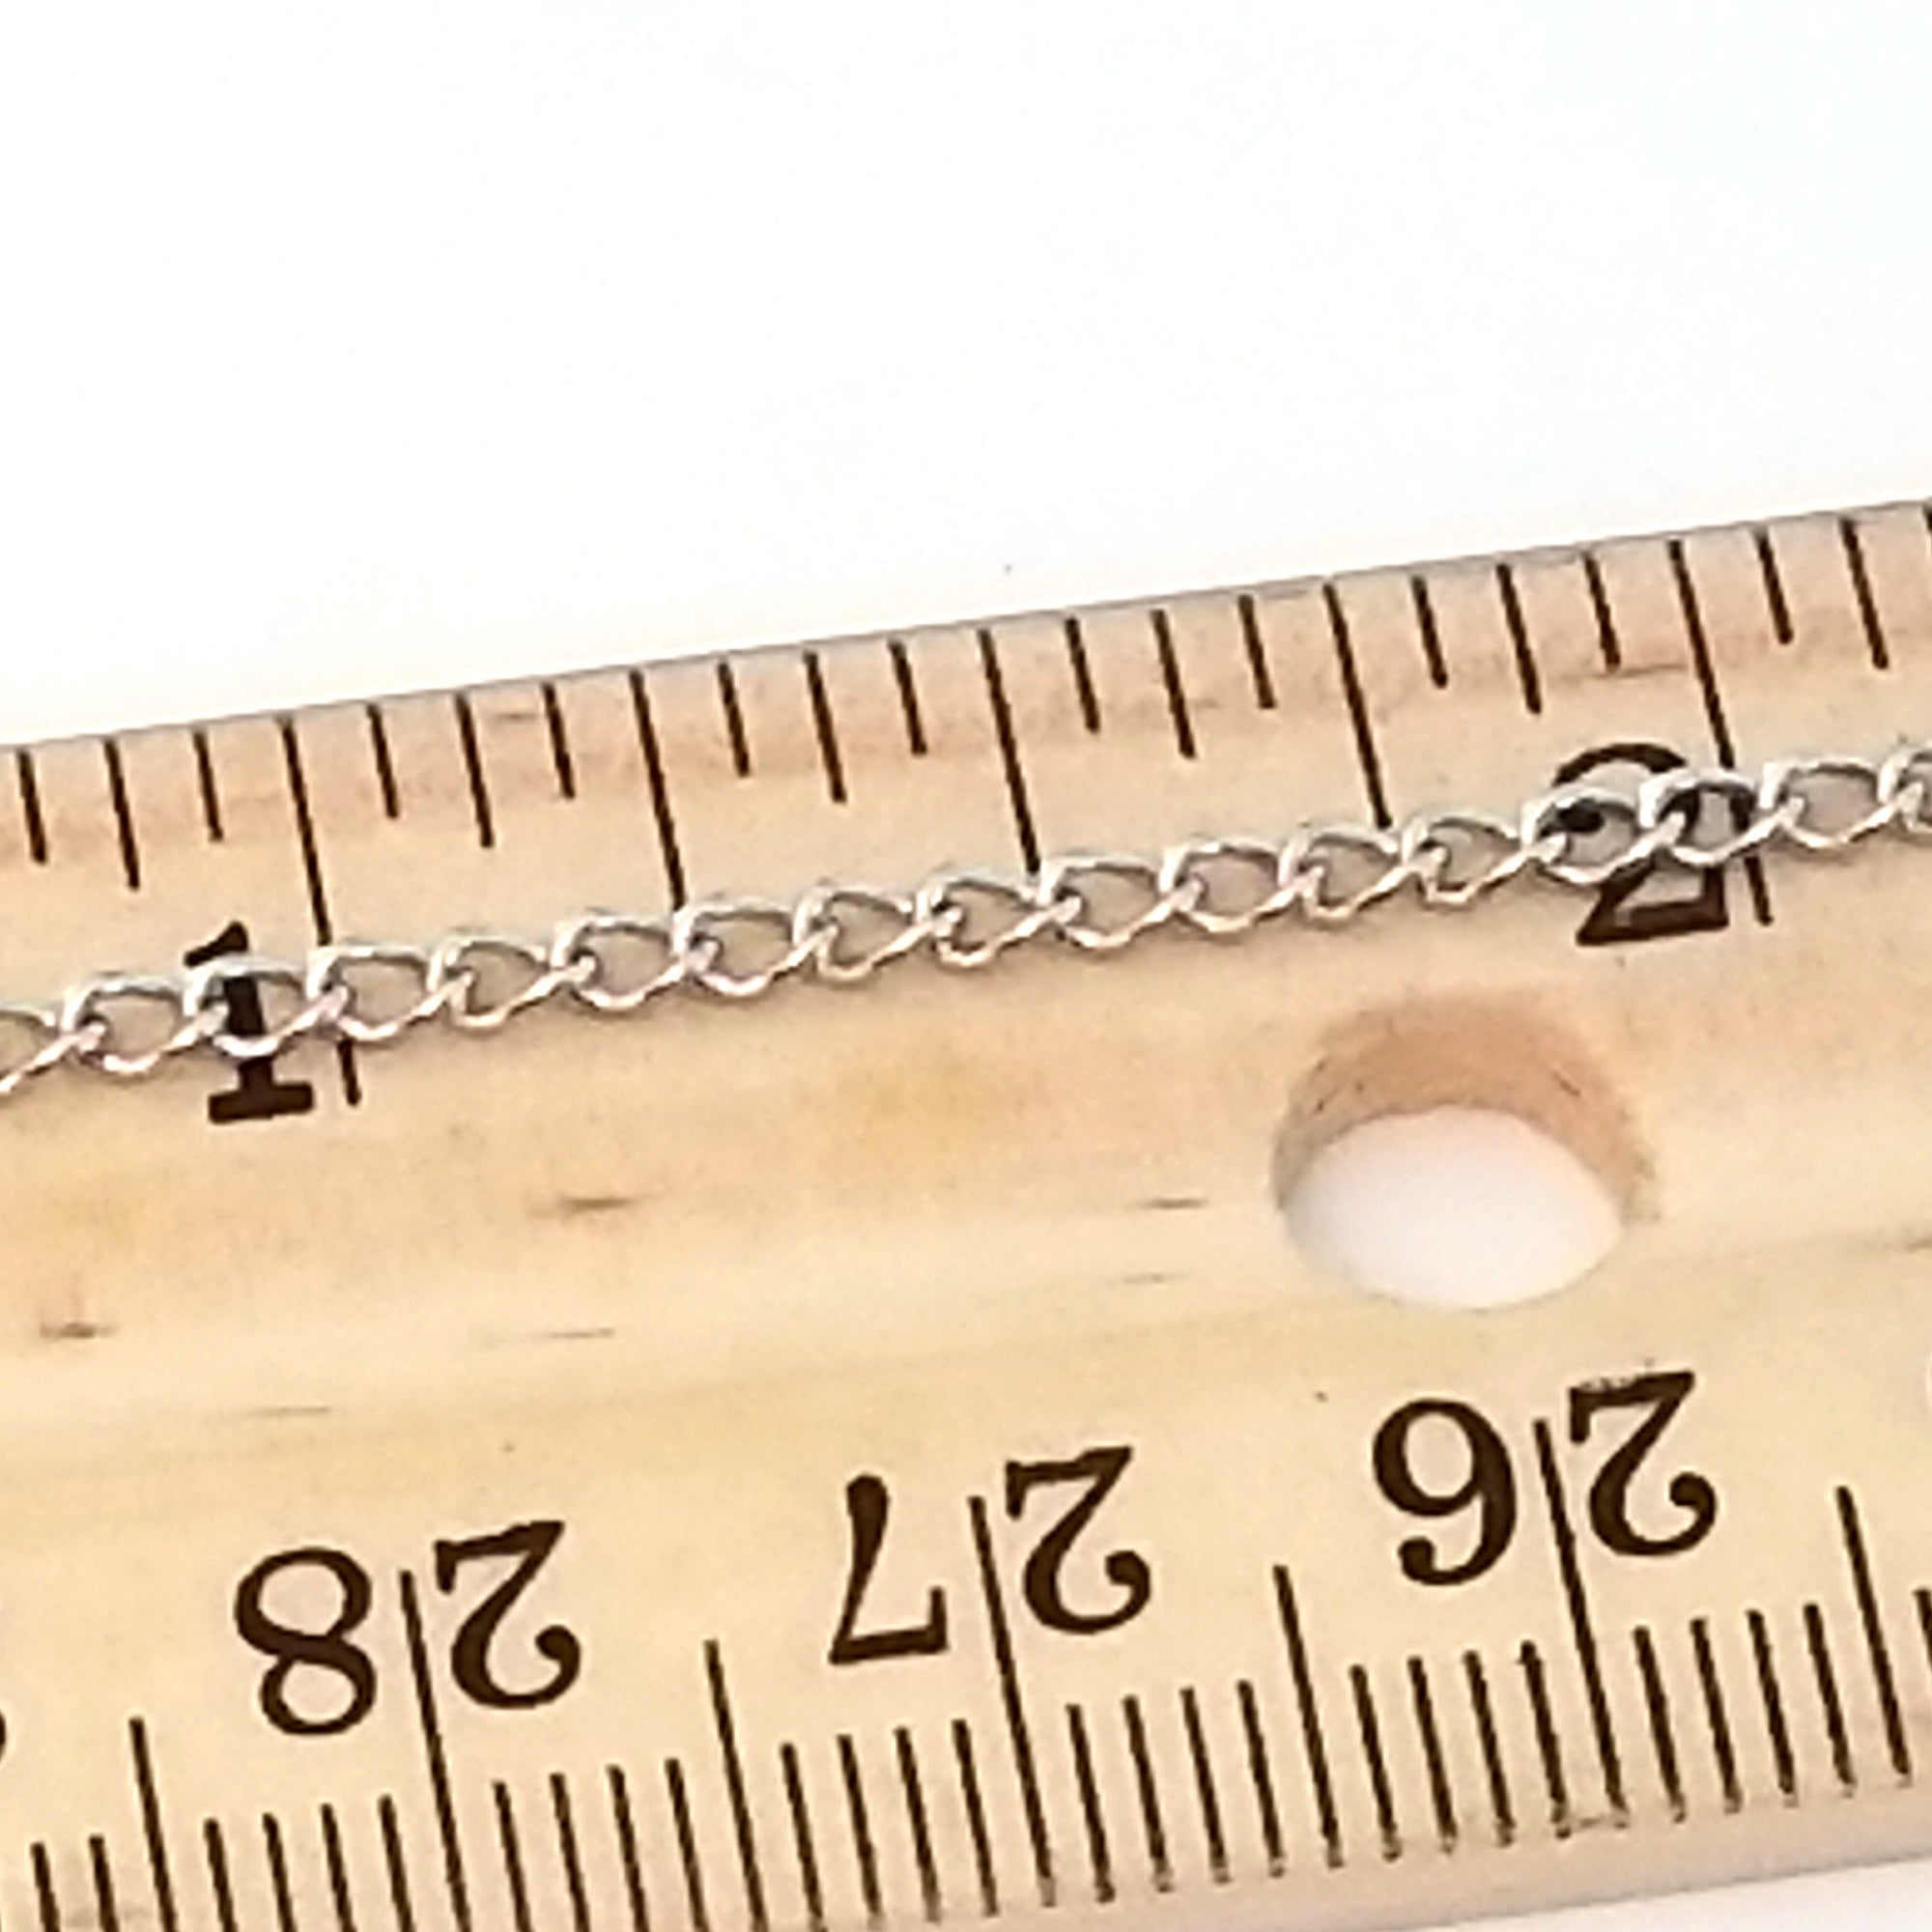 Twist Chain, Stainless Steel Chain, Bulk 50 Meters Spooled, 4x3x1mm, # -  Jewelry Tool Box